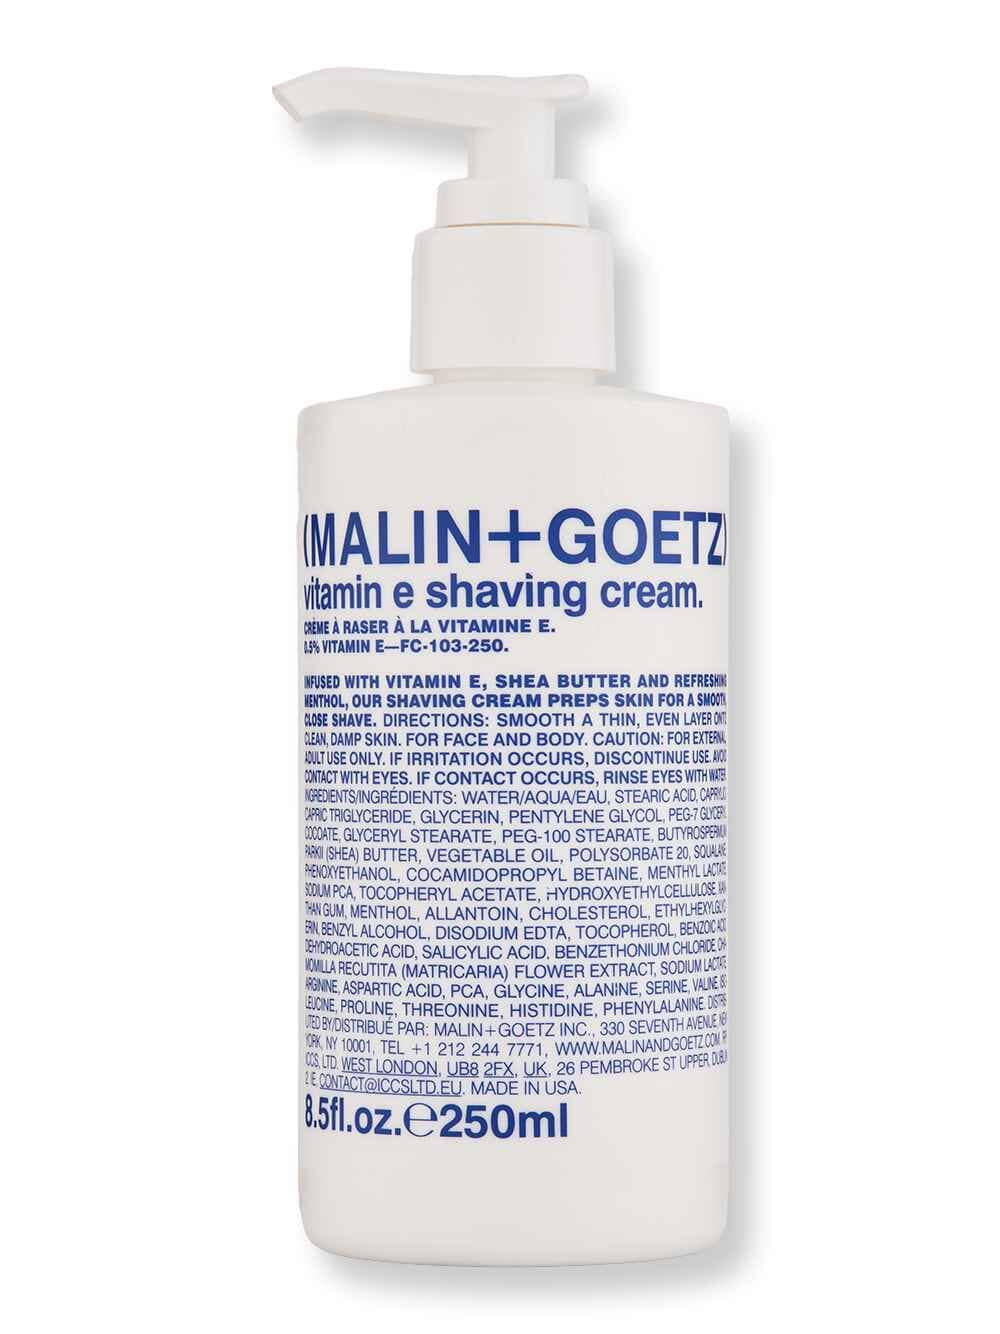 Malin + Goetz Malin + Goetz Vitamin E Shaving Cream 8.5 oz250 ml Shaving Creams, Lotions & Gels 